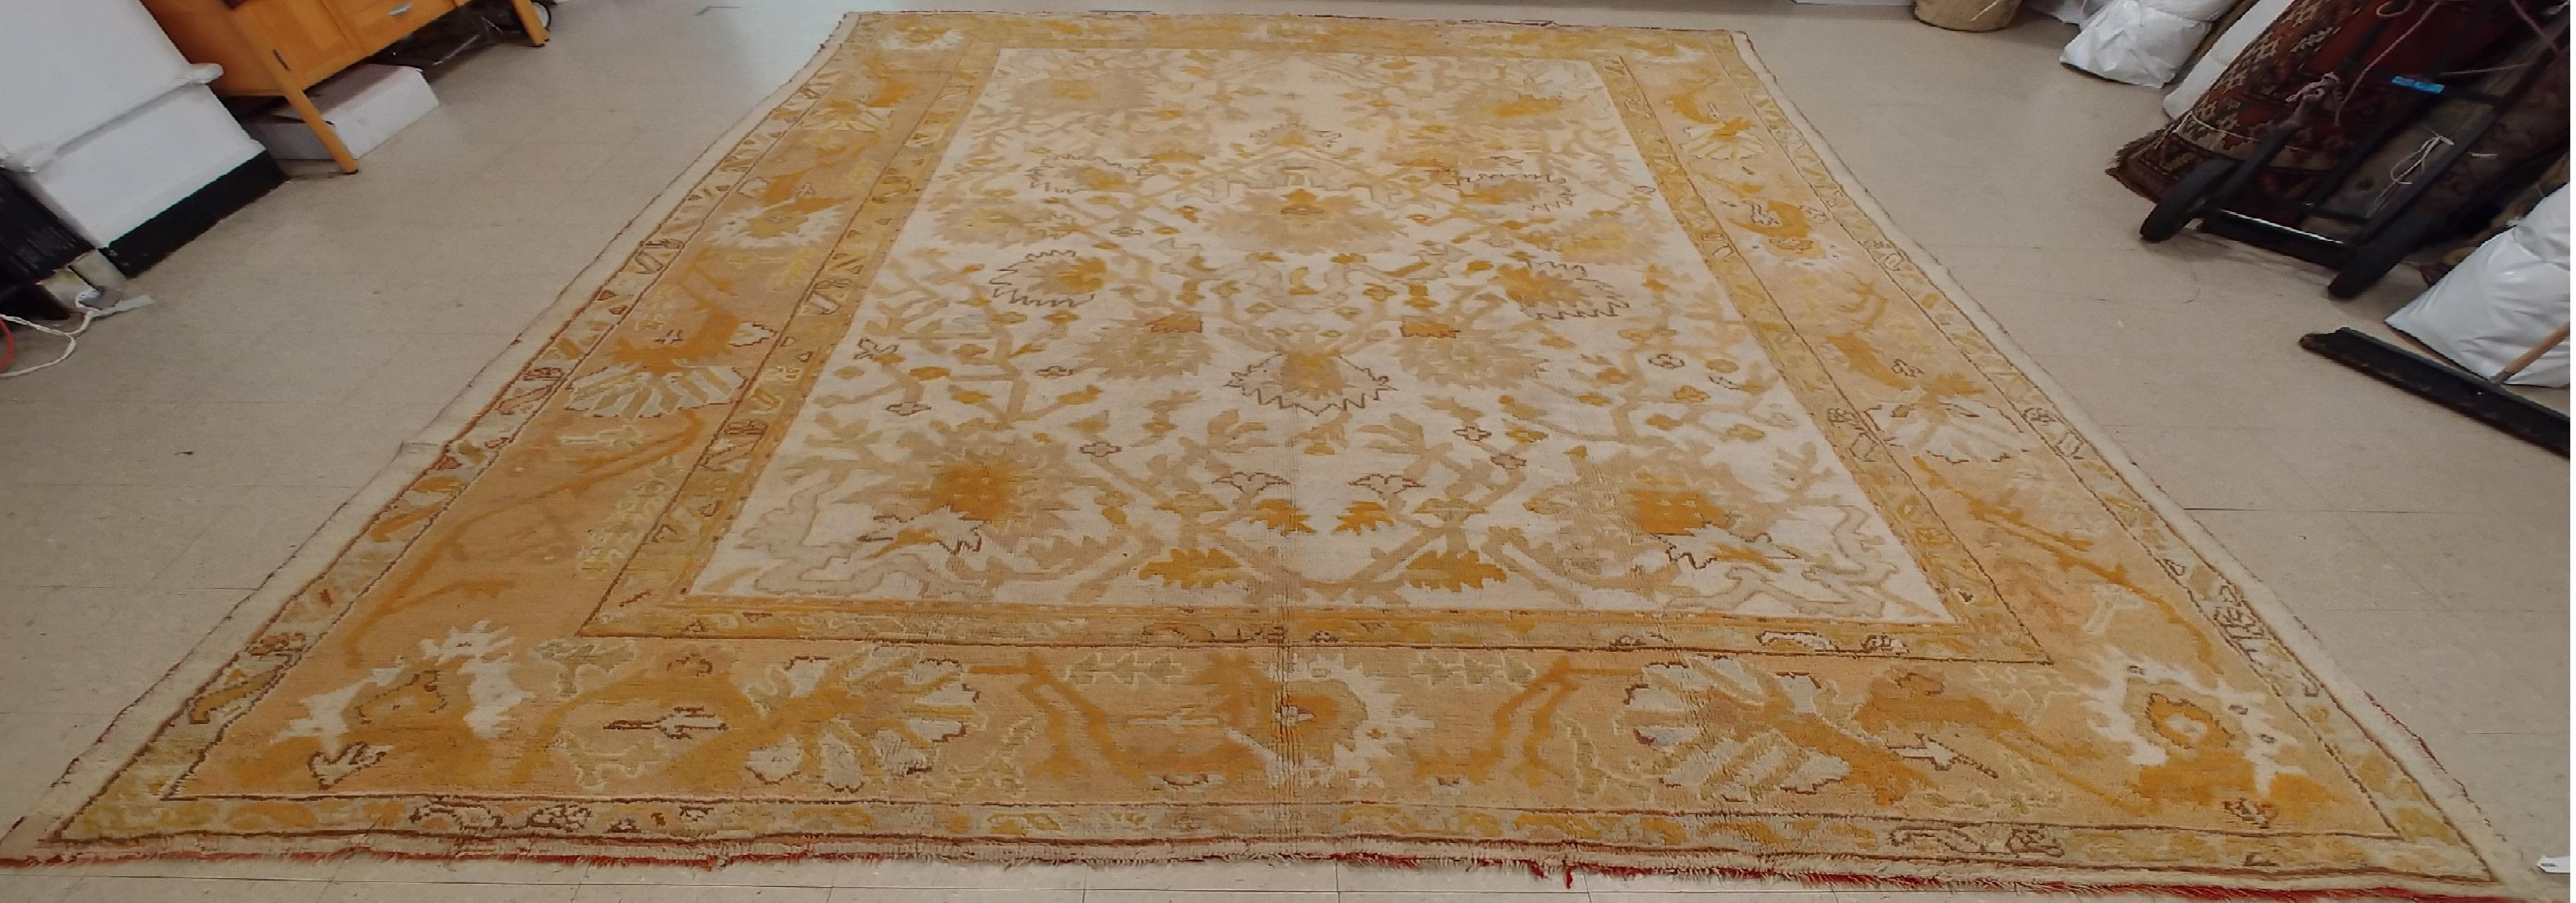 Antique Oushak Carpet Handmade Turkish Oriental Rug Beige, Taupe, Soft Pale Blue 5